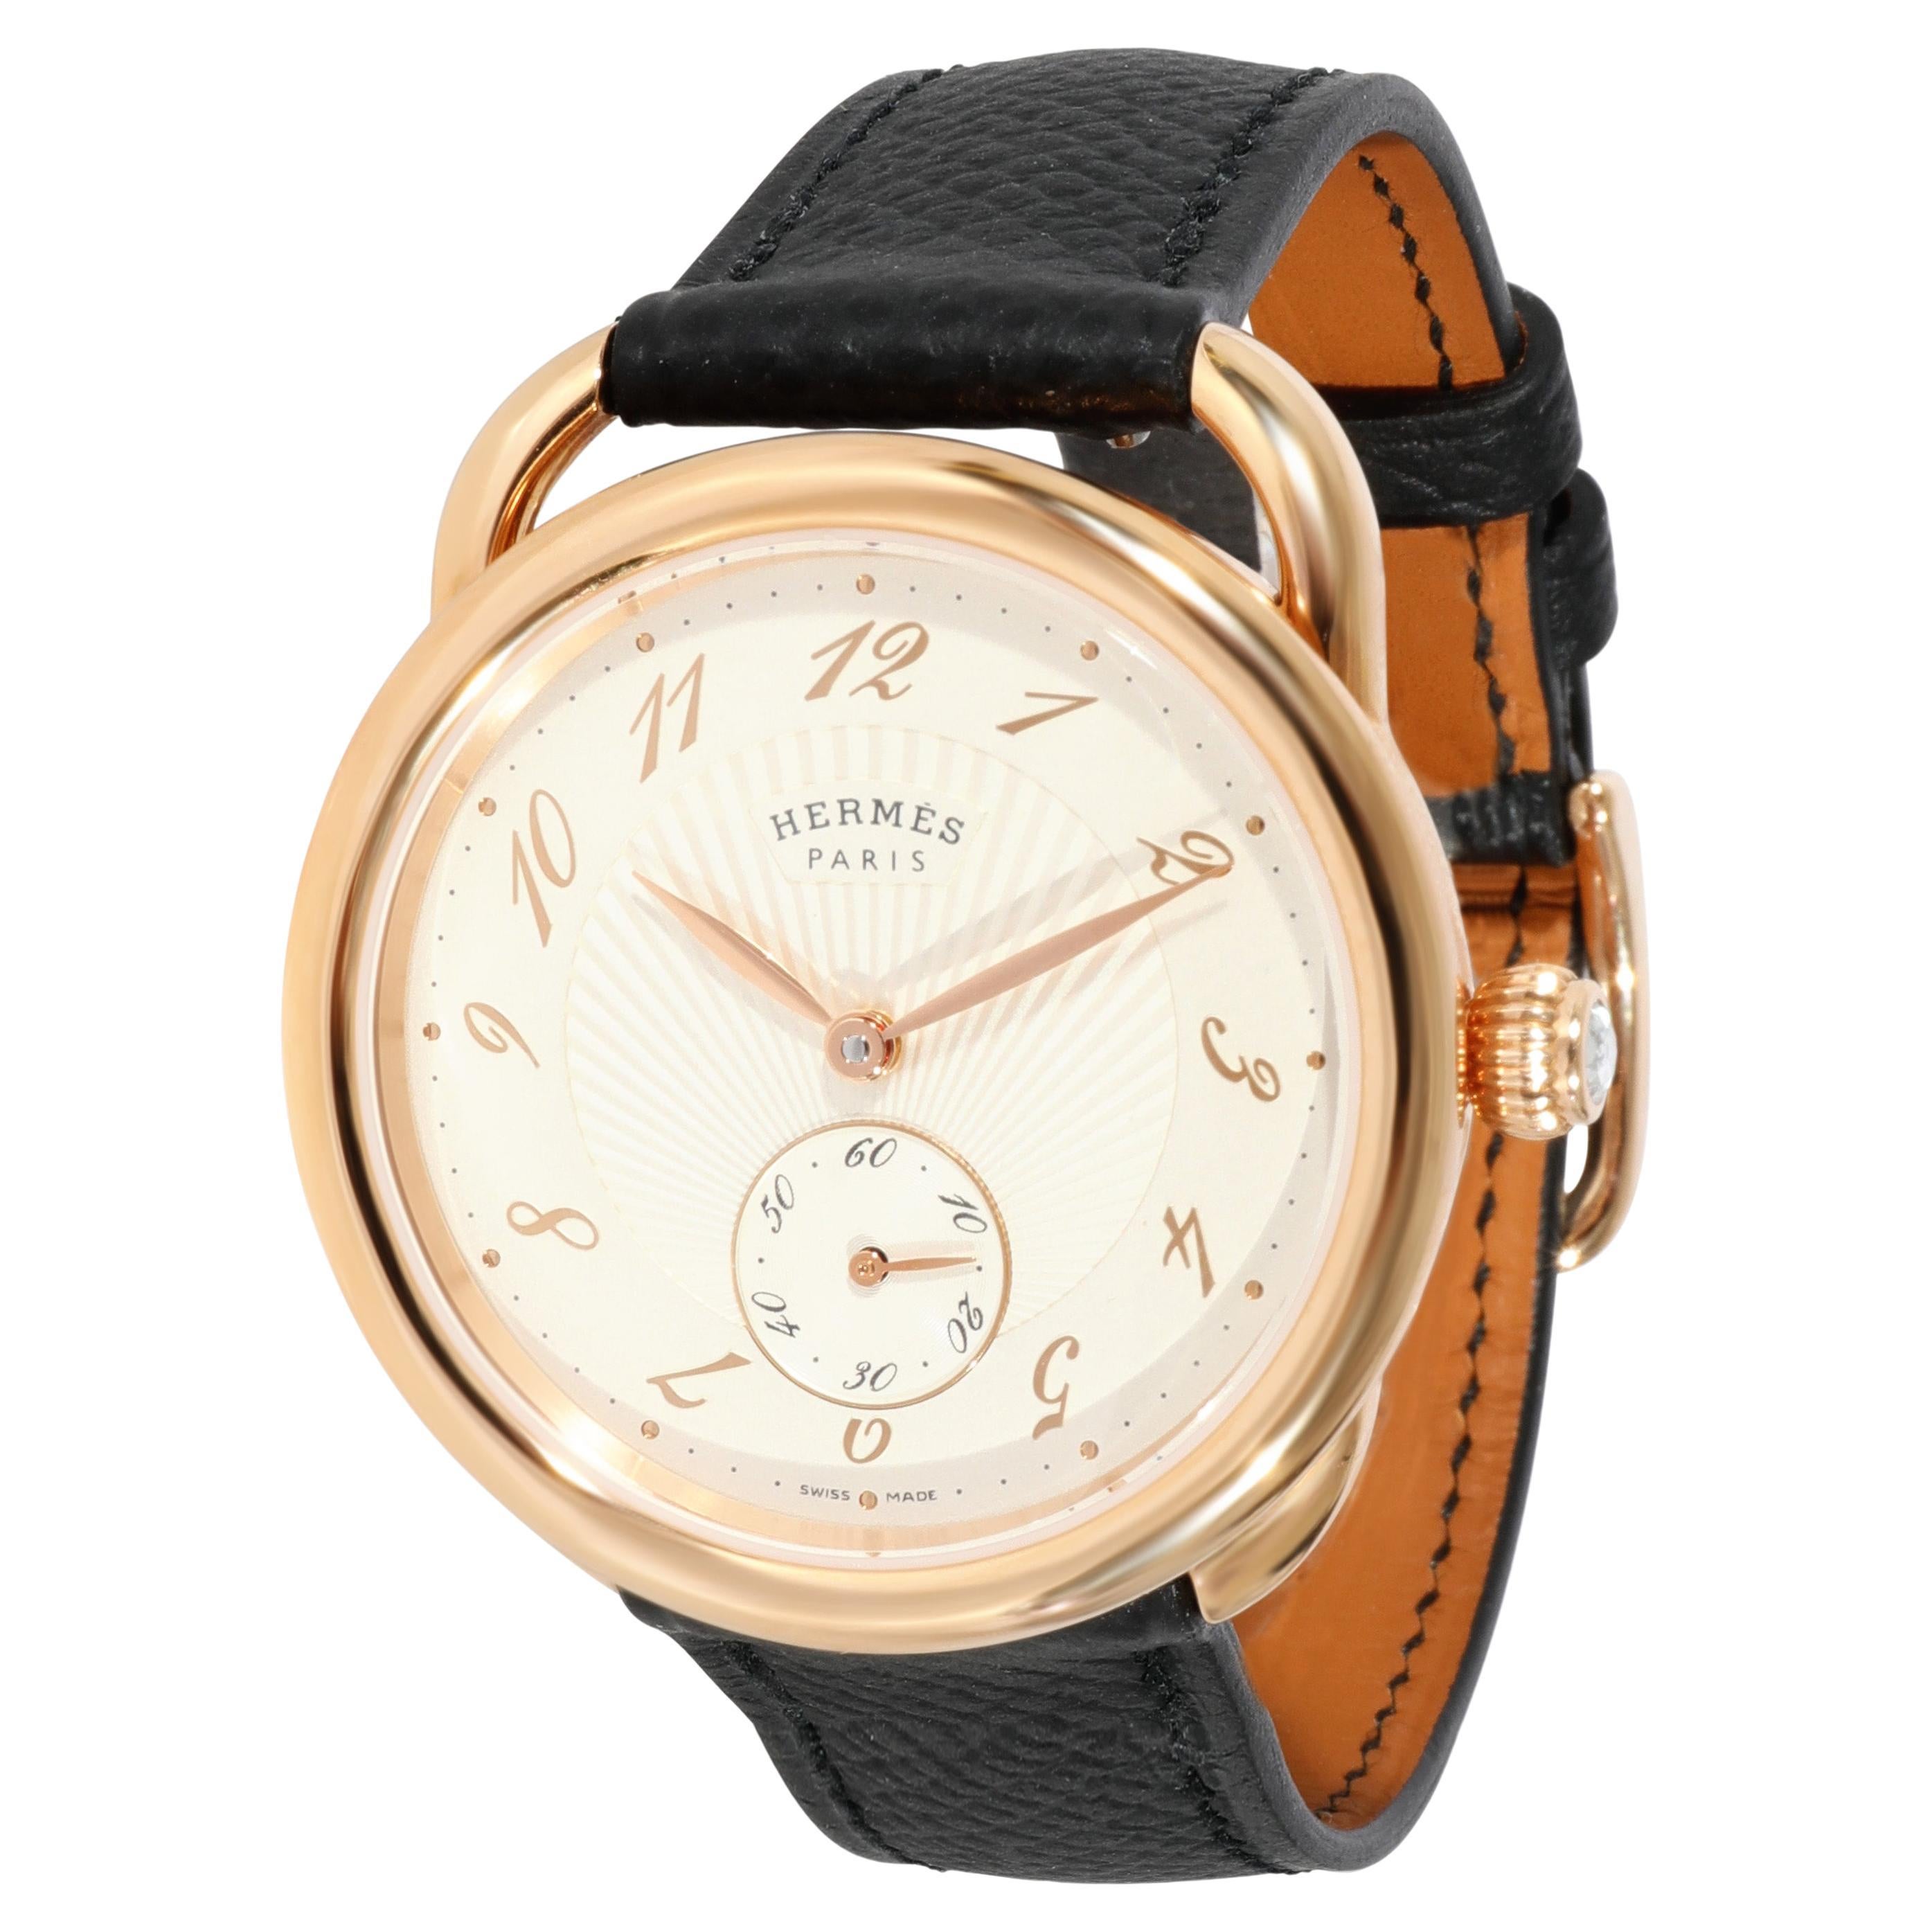 Hermès Arceau Ecuyere AR6.670.221.MN0 Unisex Watch in 18kt Rose Gold